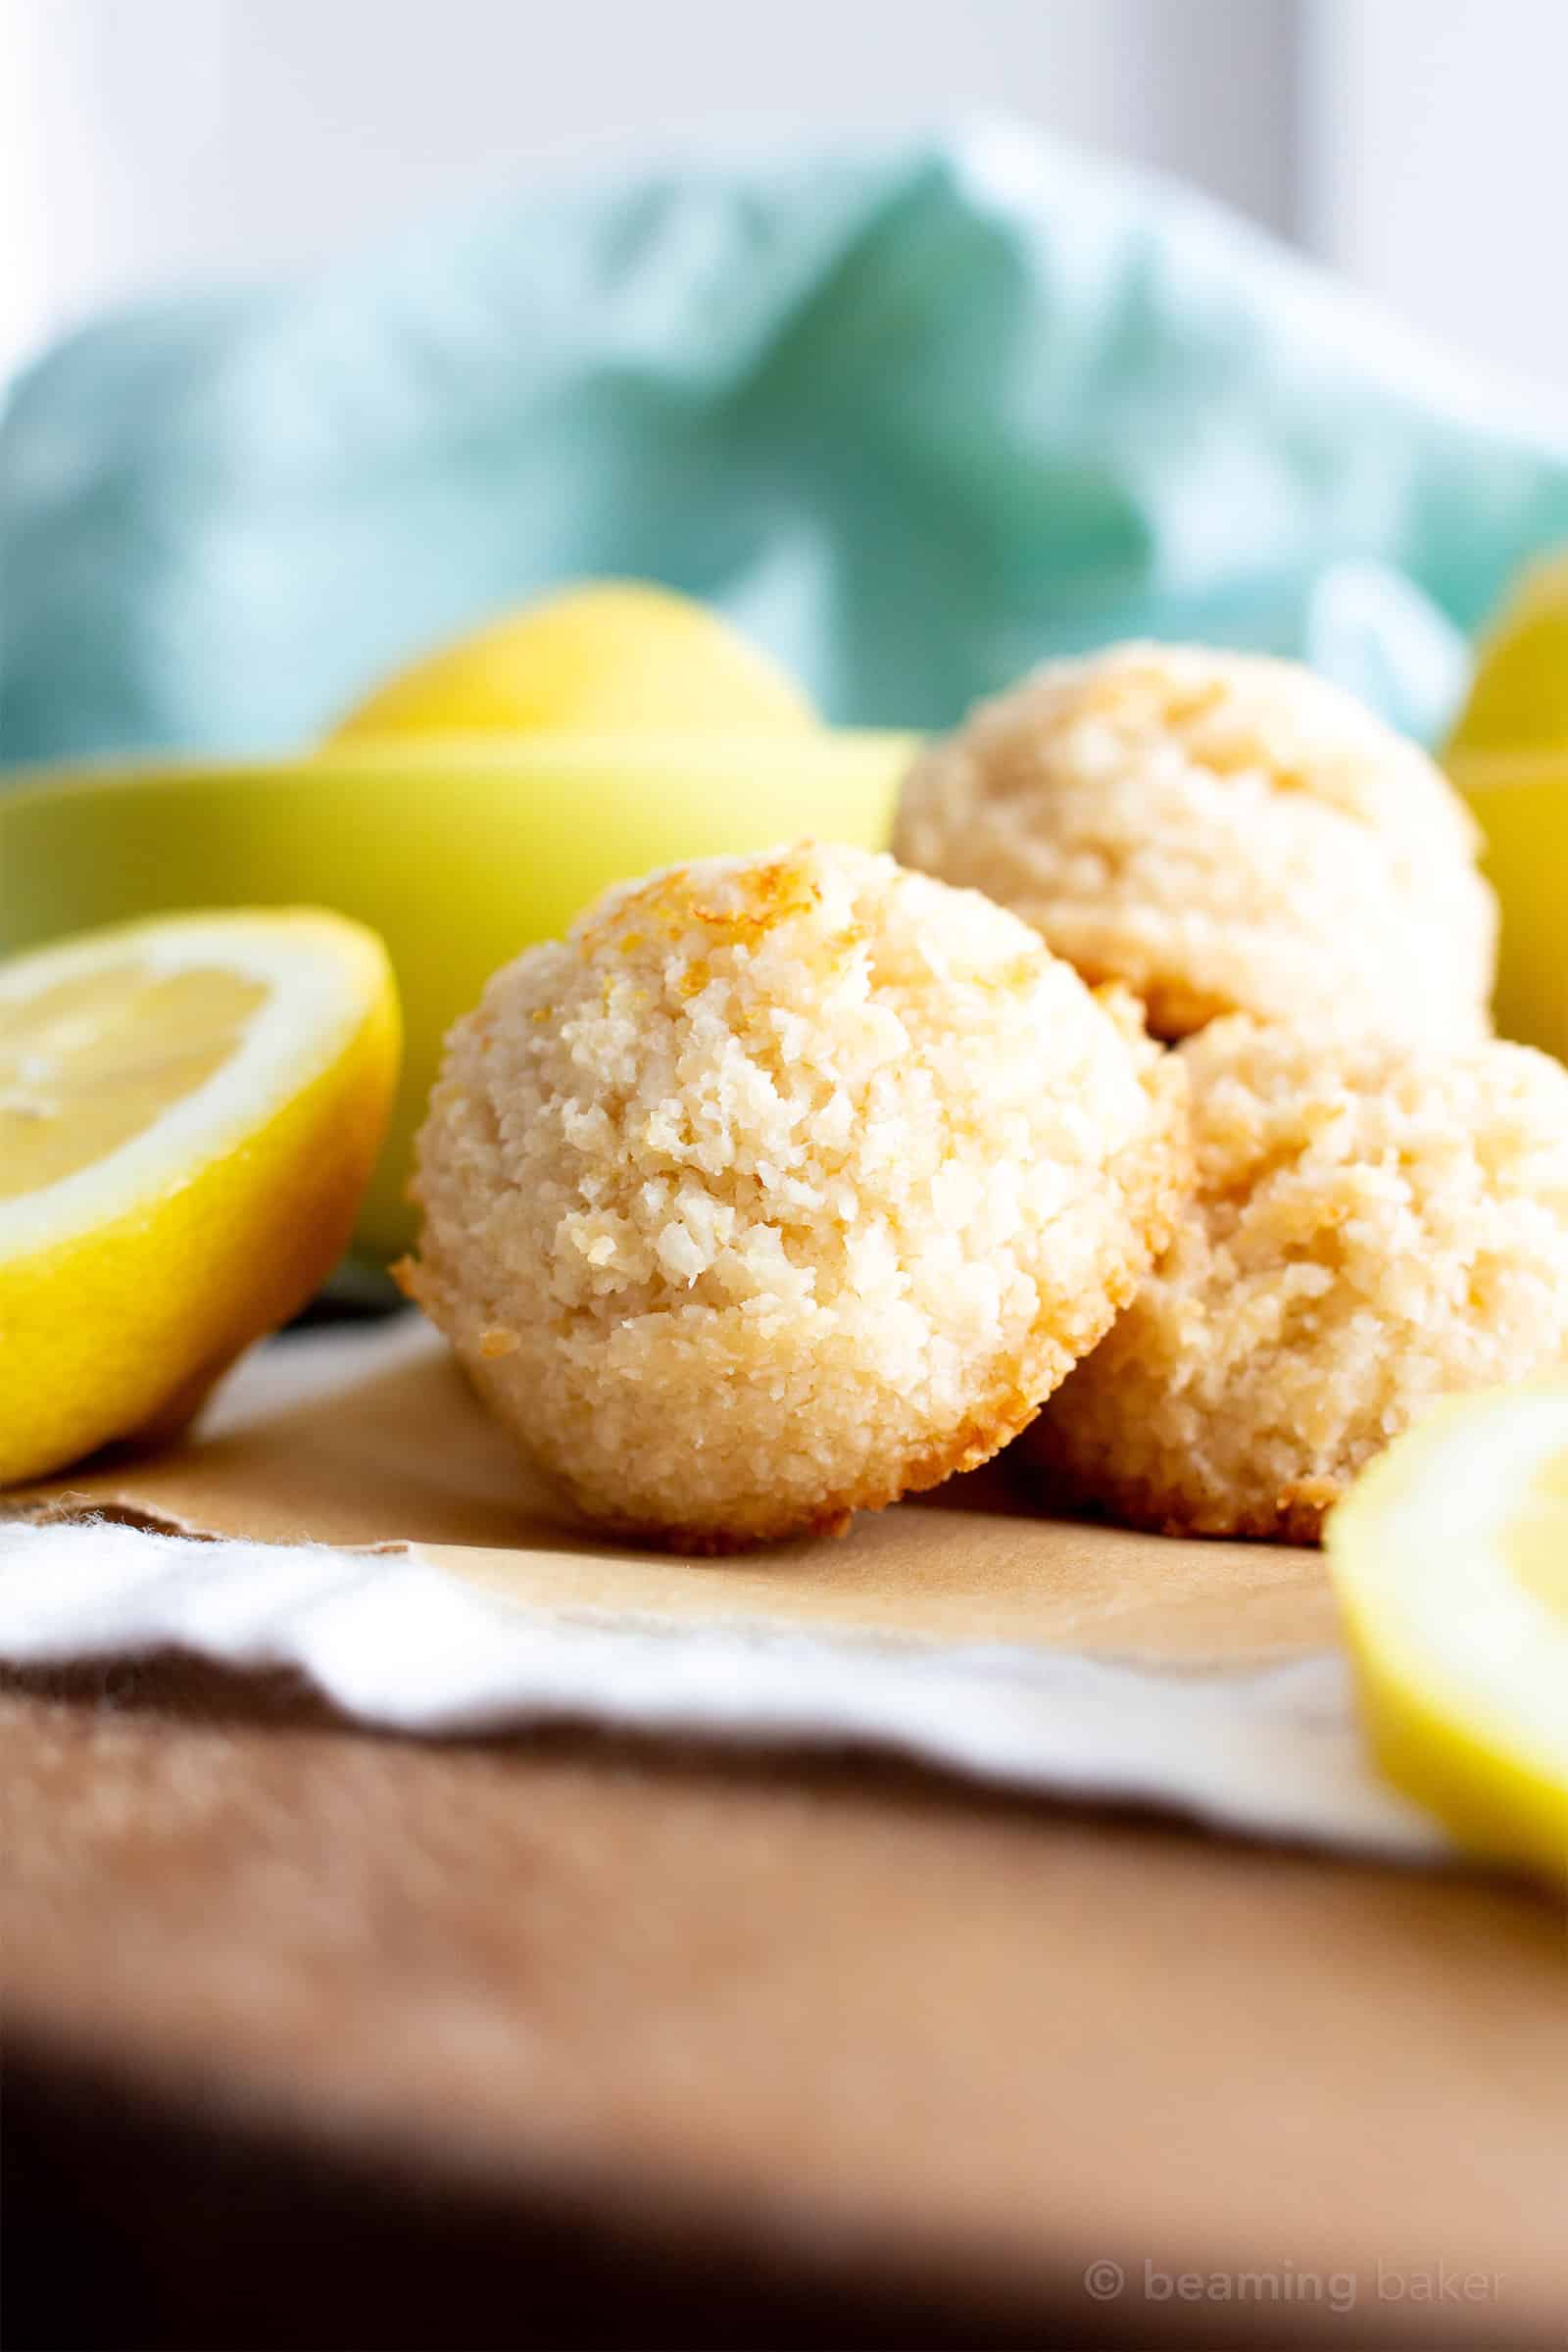 Lemon Coconut Macaroons Recipe (V, GF): an easy vegan recipe for sweetly tart lemon macaroons made from healthy ingredients to brighten your day! #Vegan #Paleo #Macaroons #Coconut #GlutenFree, #DairyFree #RefinedSugarFree #Dessert #HealthyDessert #Lemon #LemonDesserts #VeganDesserts | Recipe at BeamingBaker.com